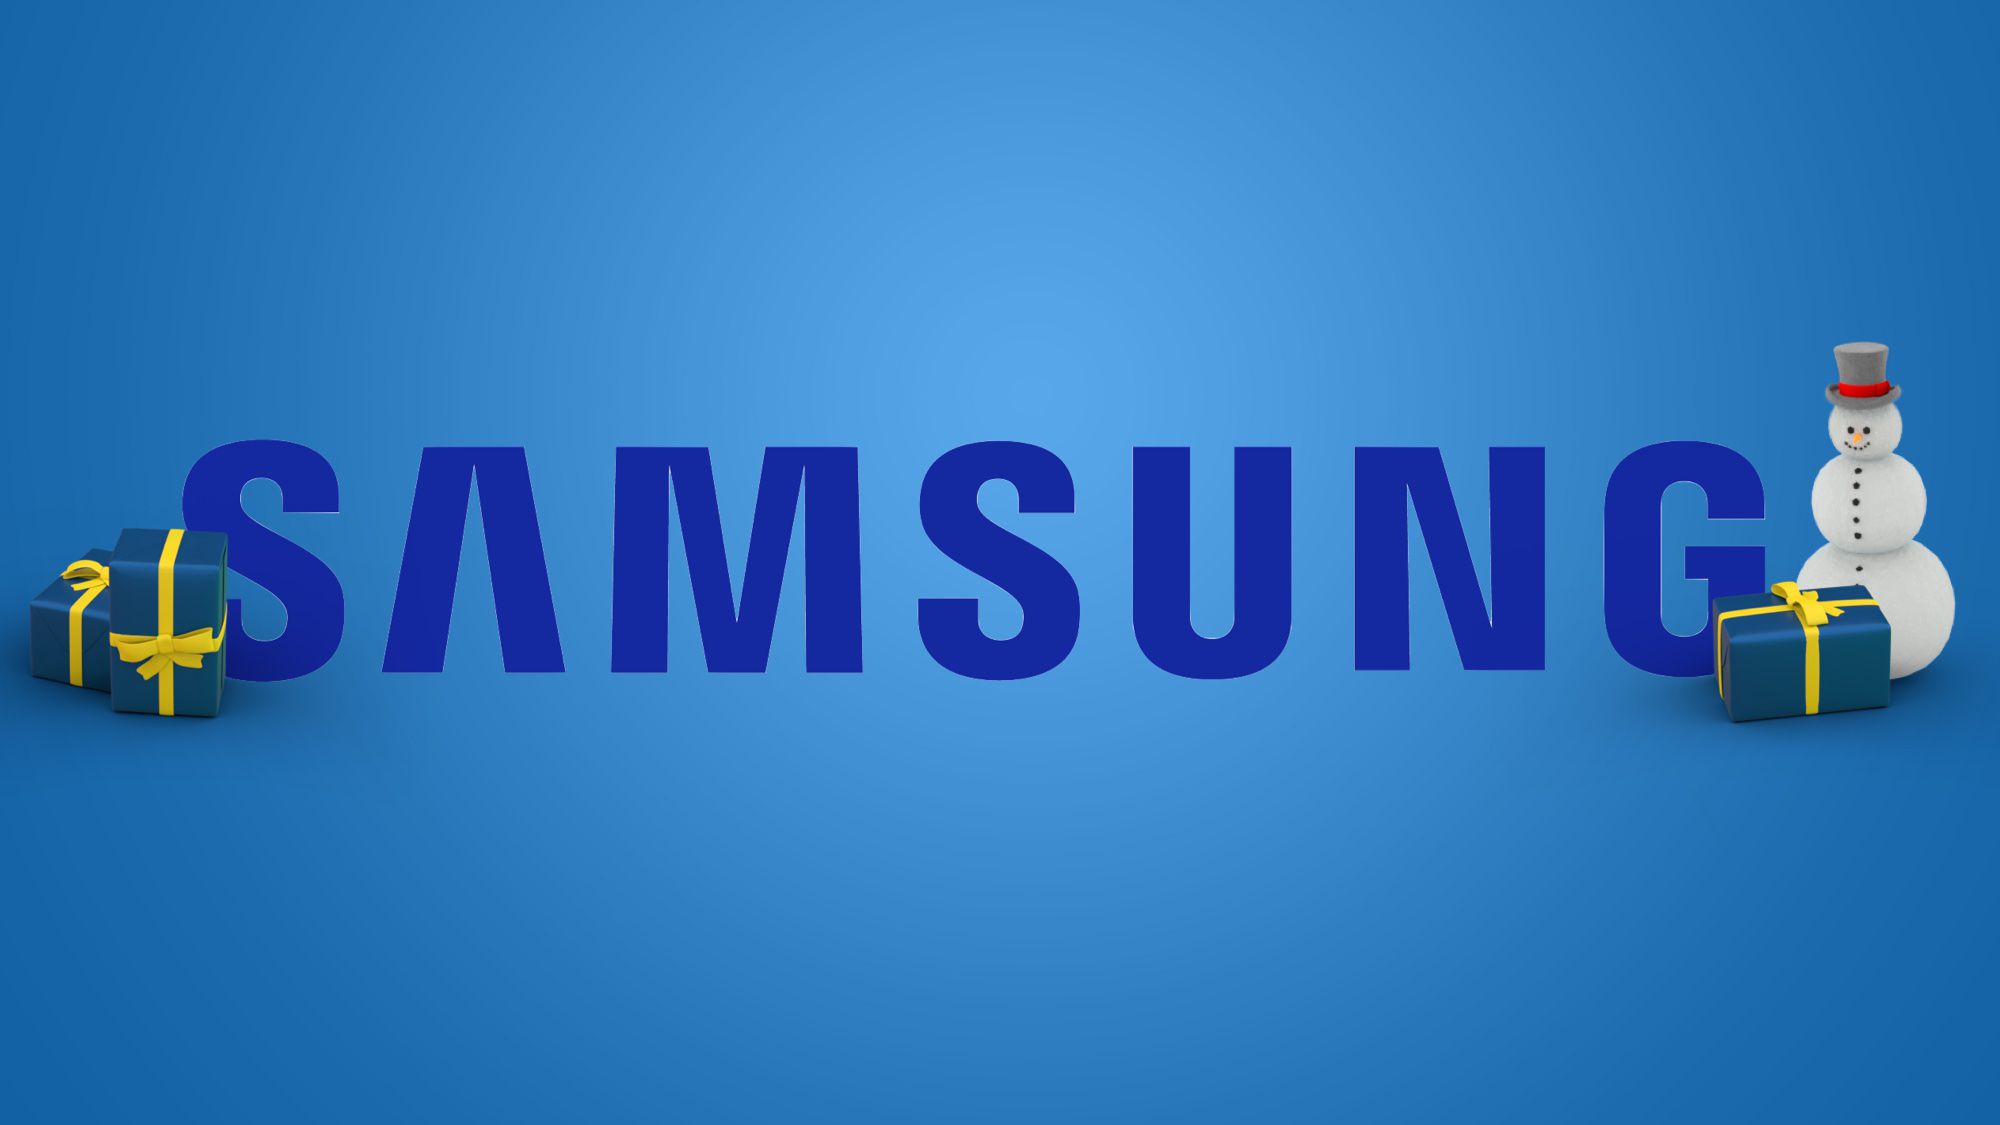 Samsung's Smart Monitor M8 Gets Massive $300 Black Friday Discount, Now  Just $399.99 - MacRumors